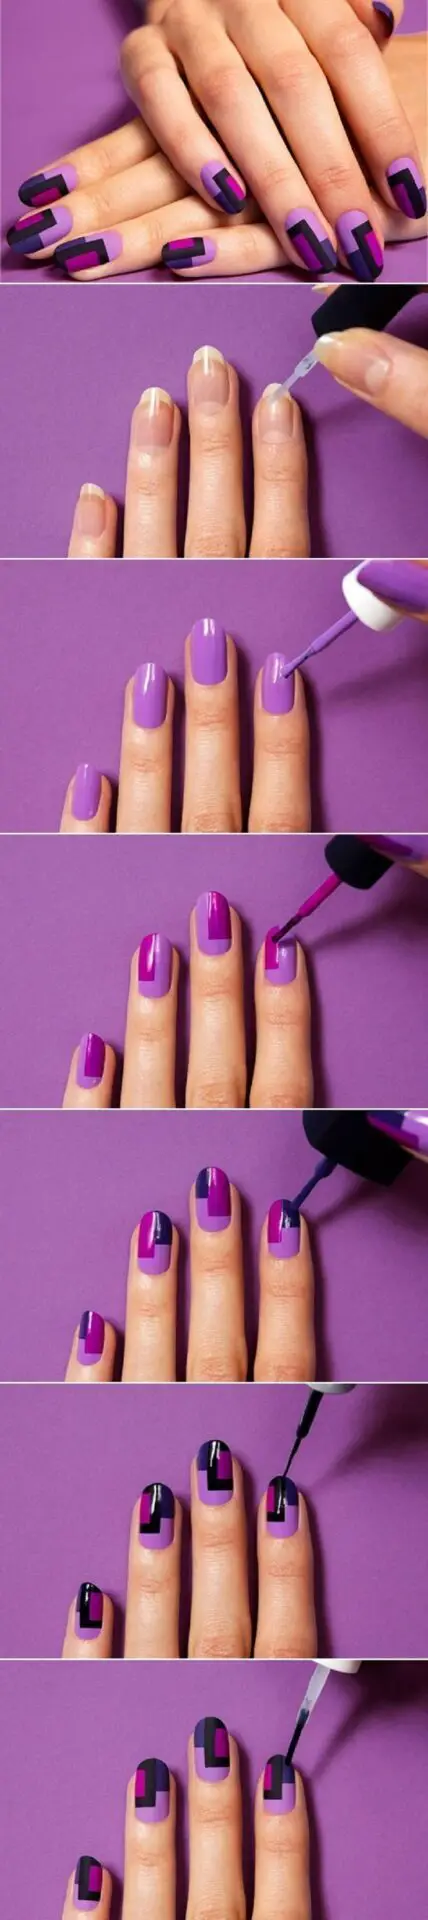 graphic-design-nails